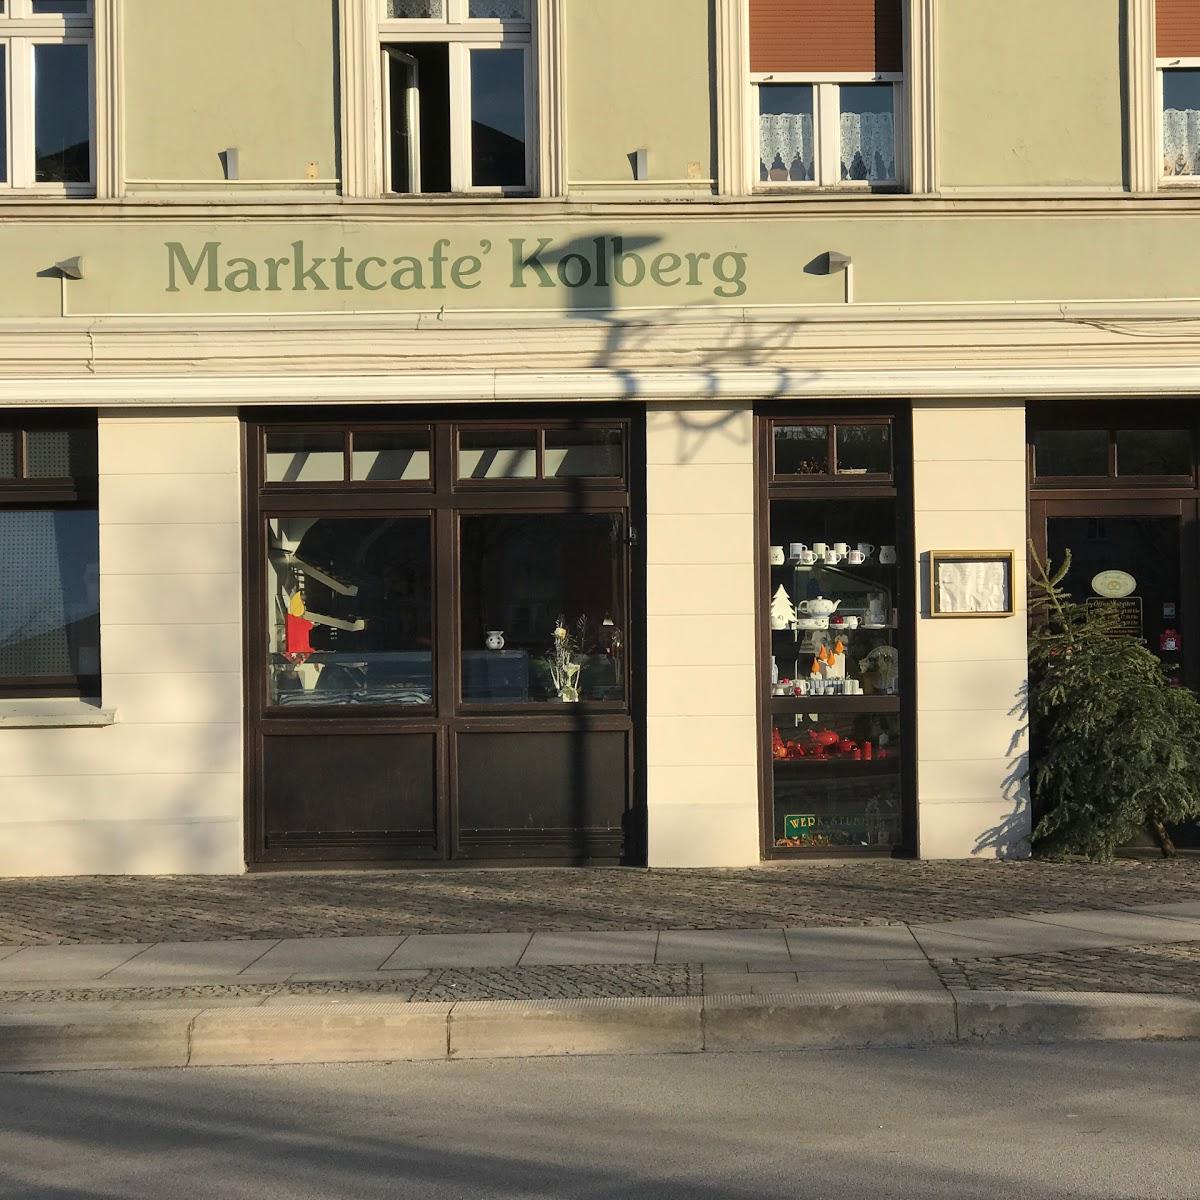 Restaurant "Marktcafe Kolberg" in Templin